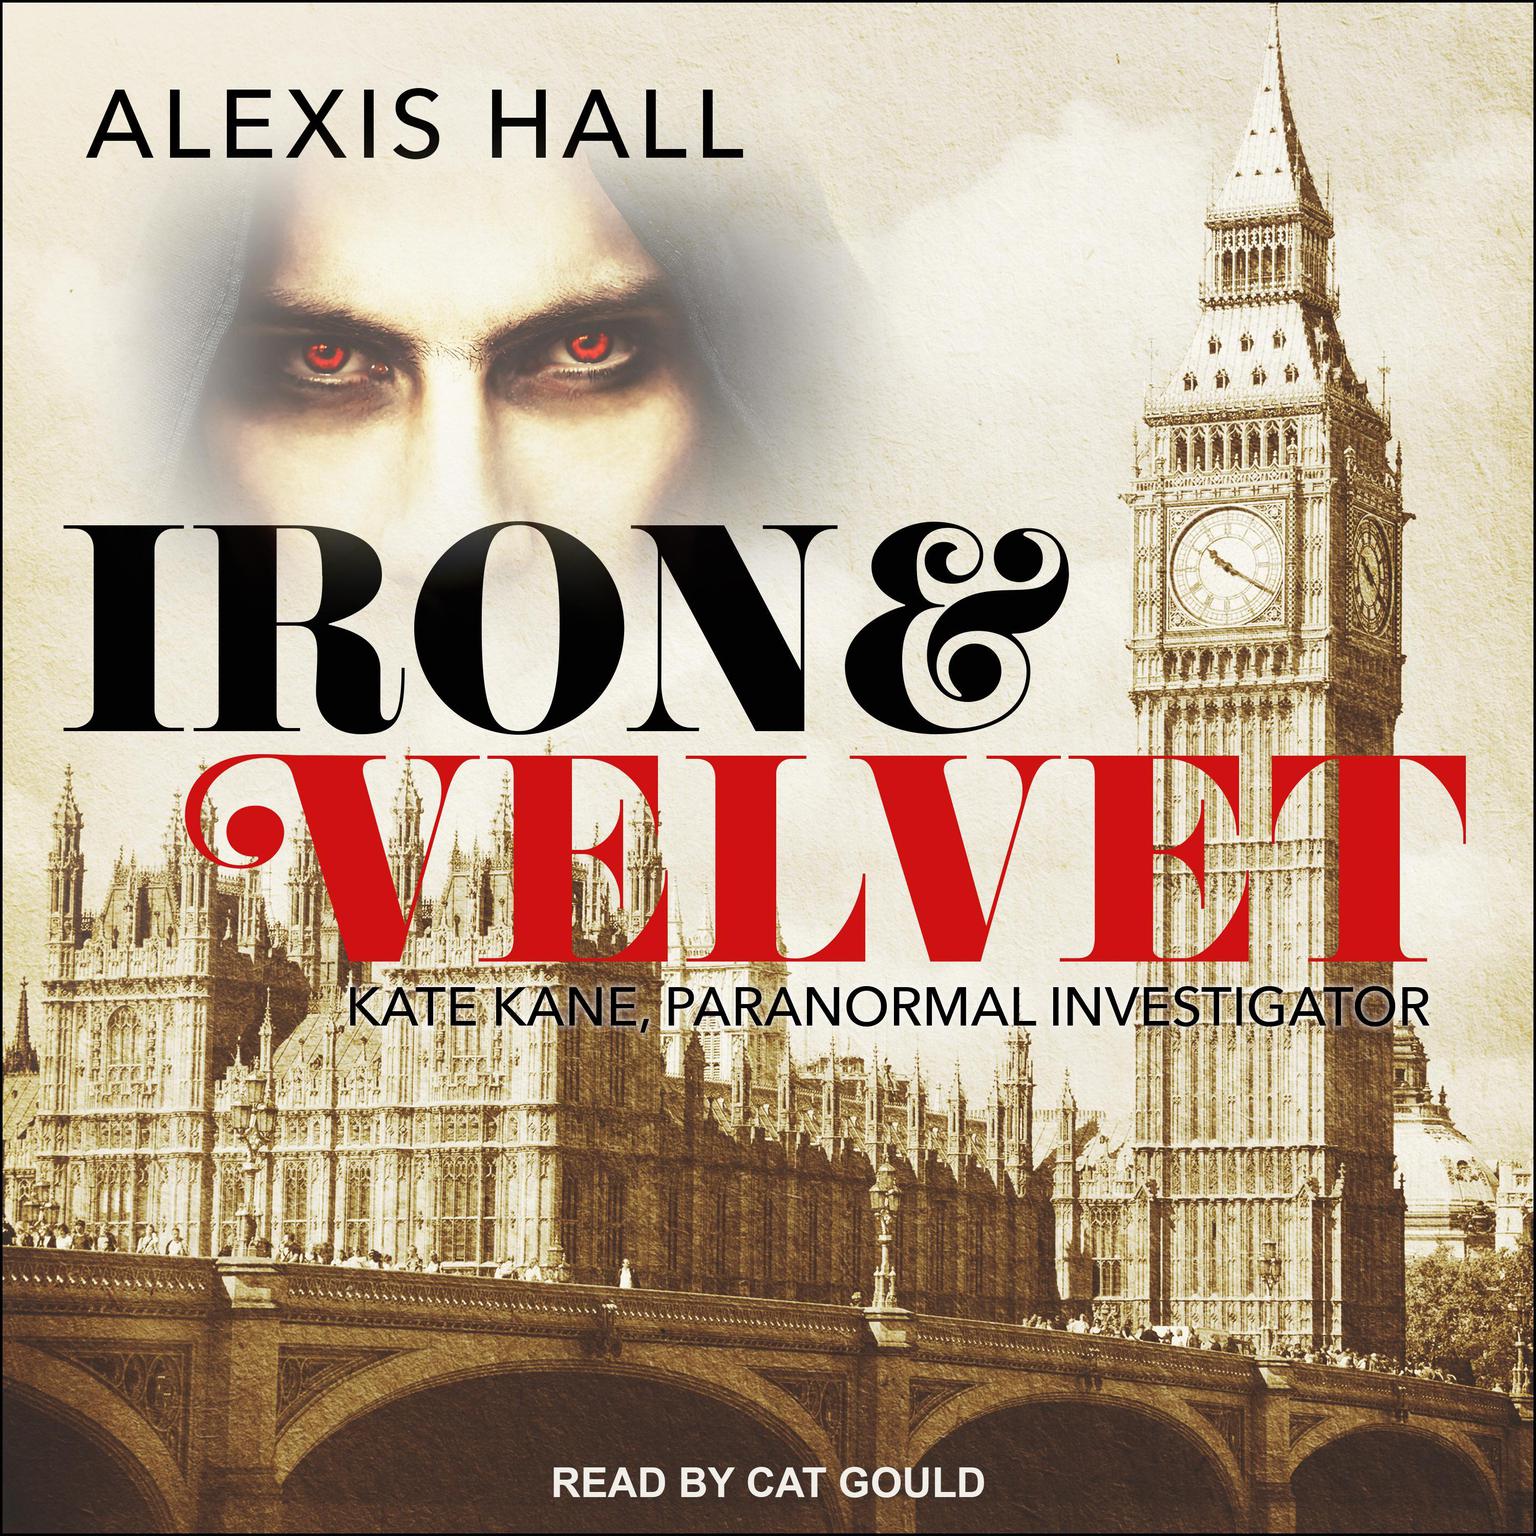 Alexis Hall, Cat Gould: Iron & Velvet (AudiobookFormat, 2020, Tantor Audio)